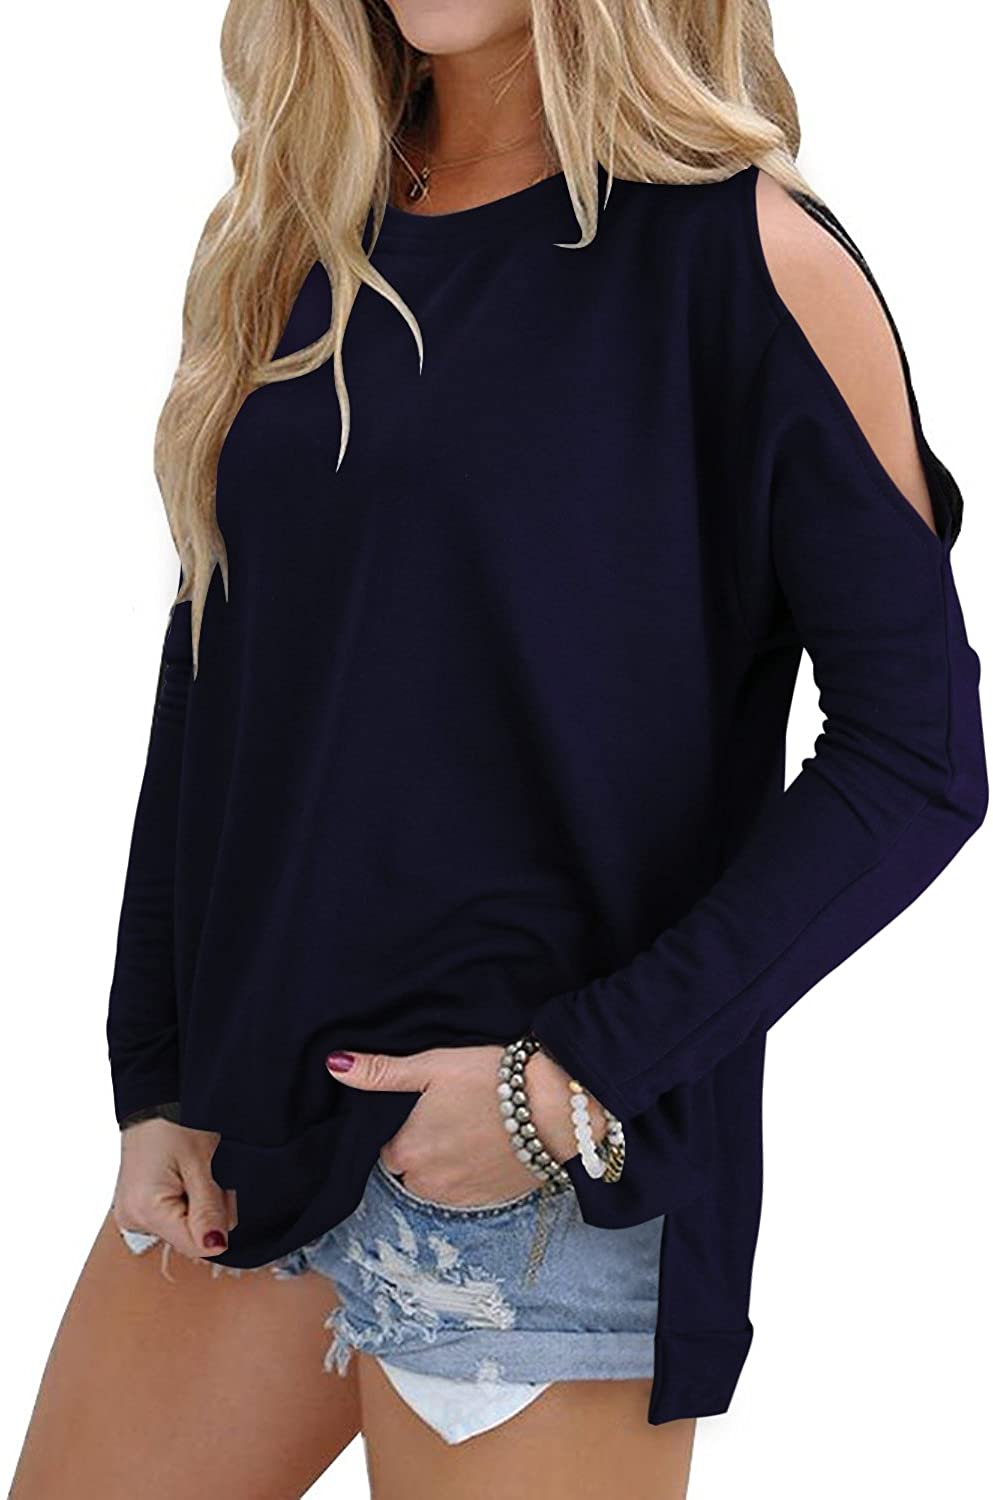 OUGES Women's Cutout Cold Shoulder Long Sleeve T-Shirt Tunic Tops | eBay